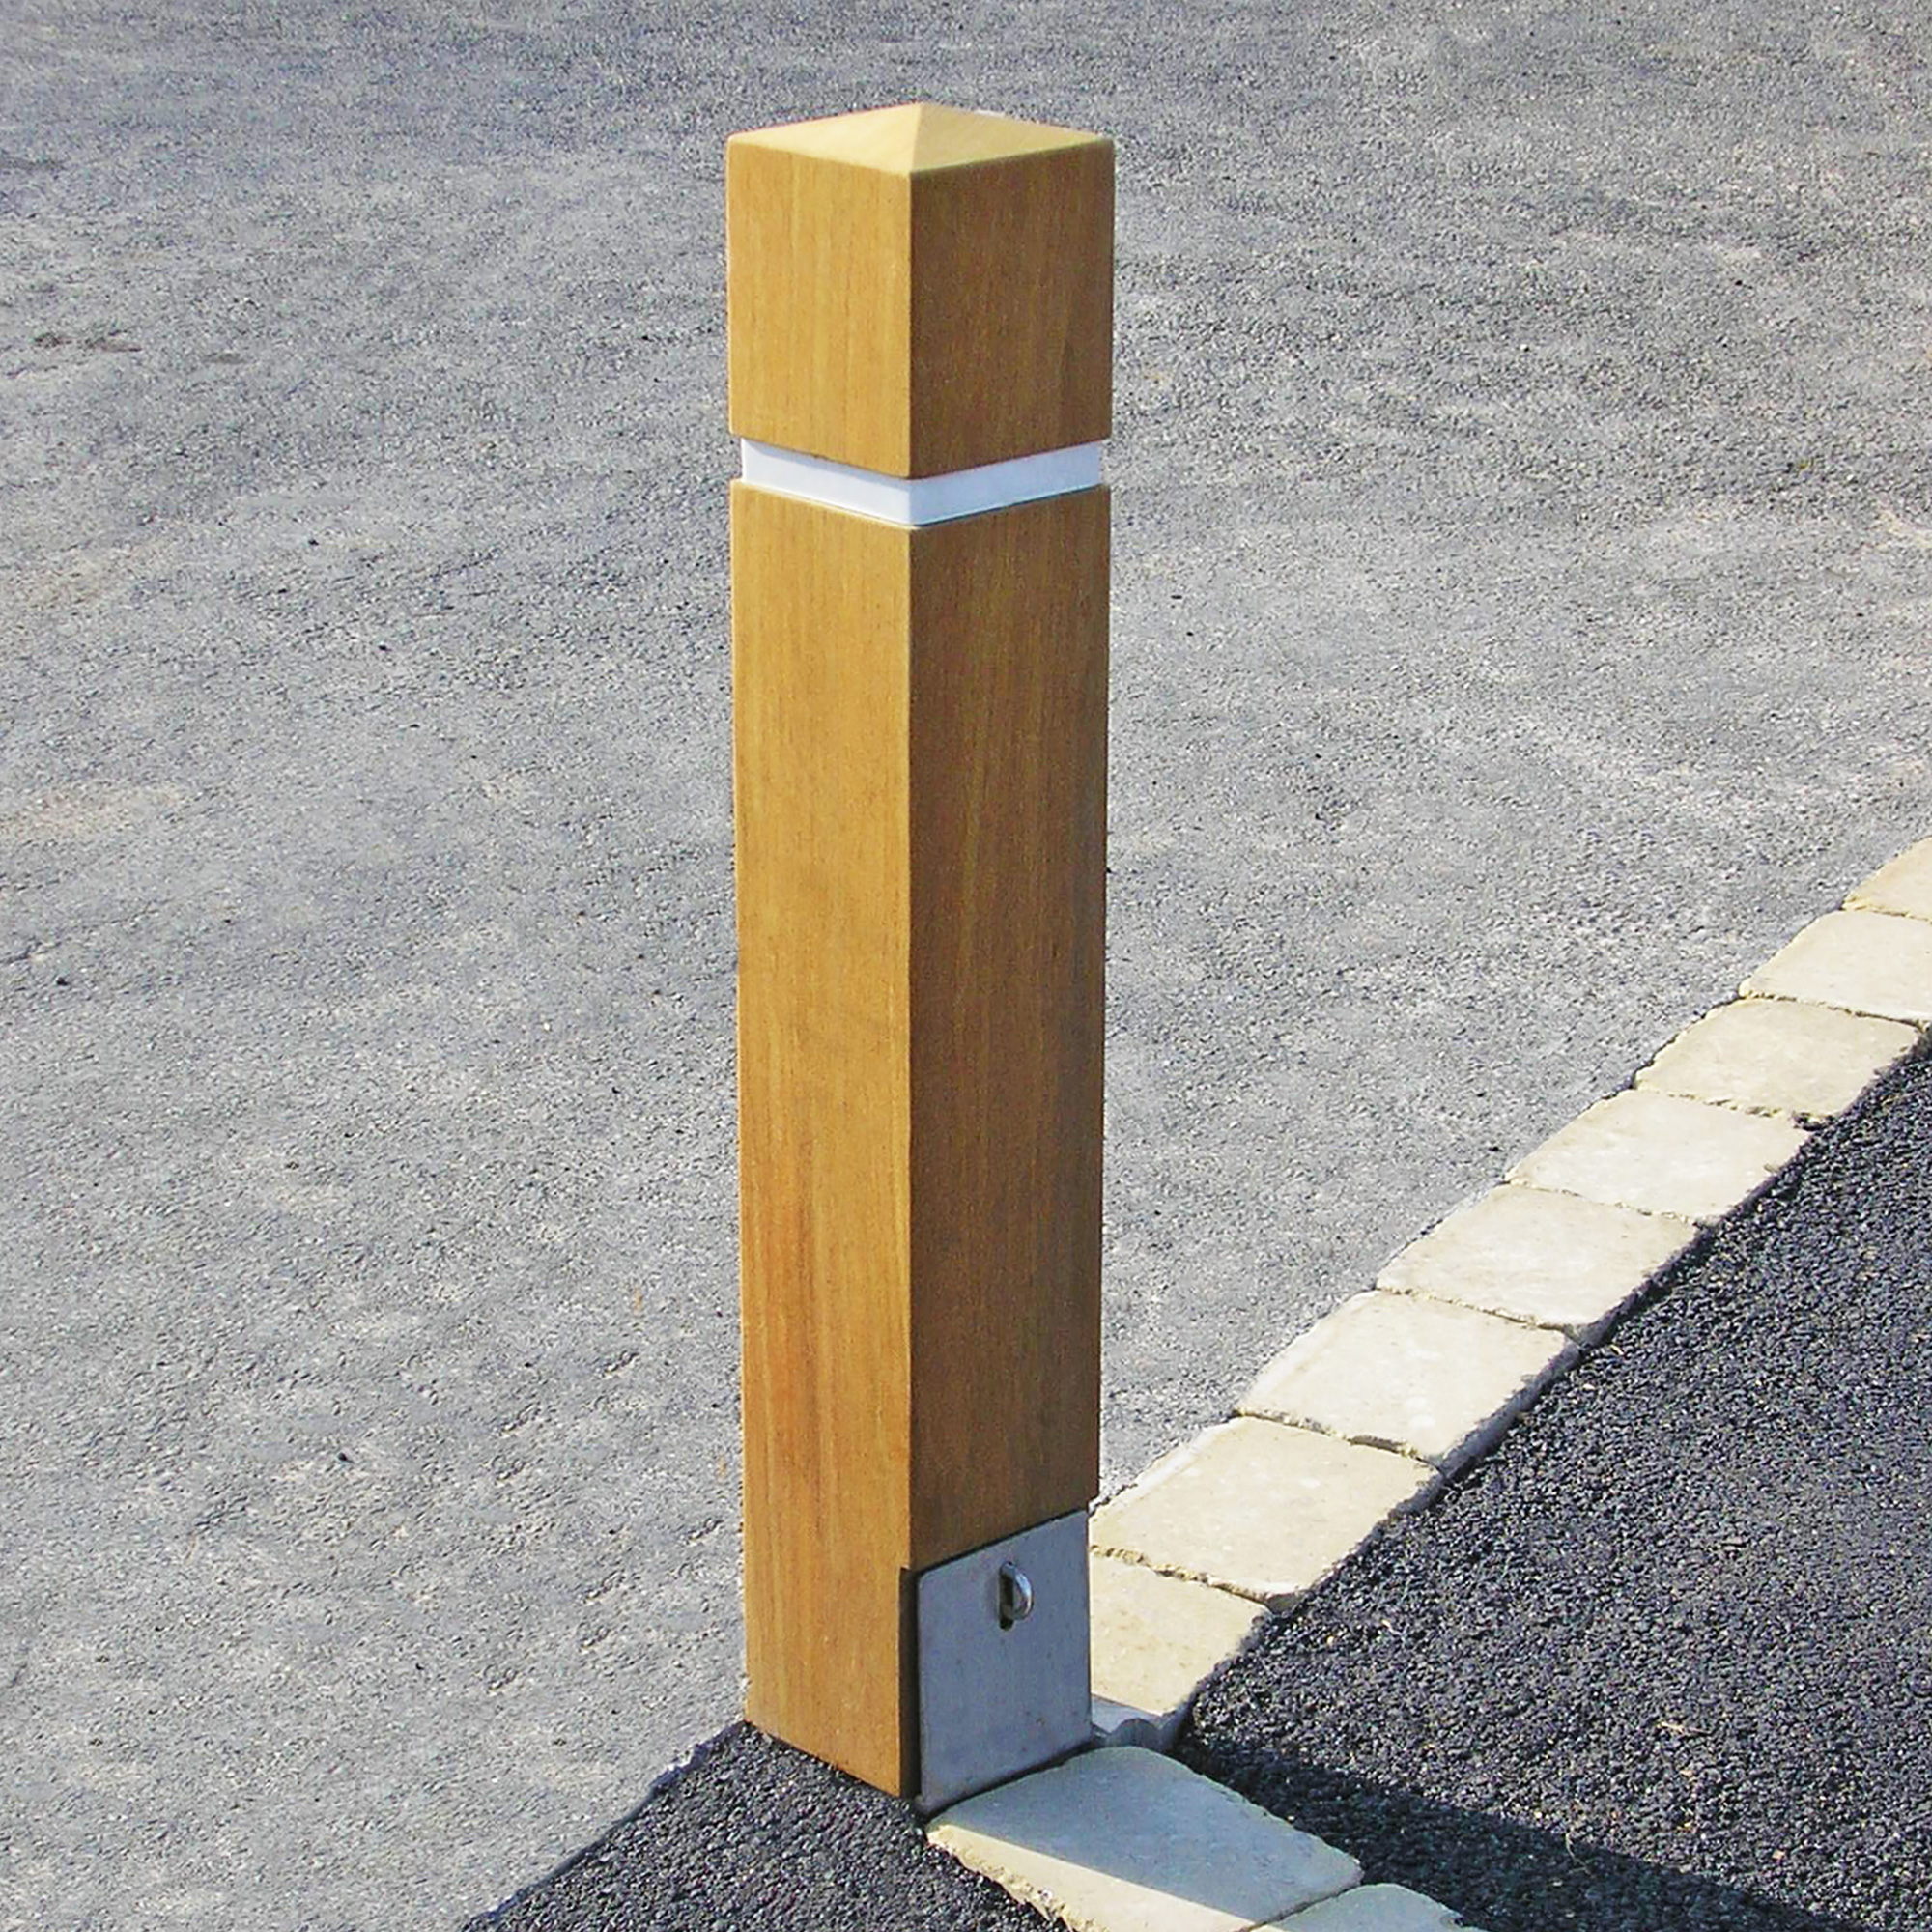 Hardwood timber bollards removable lockable